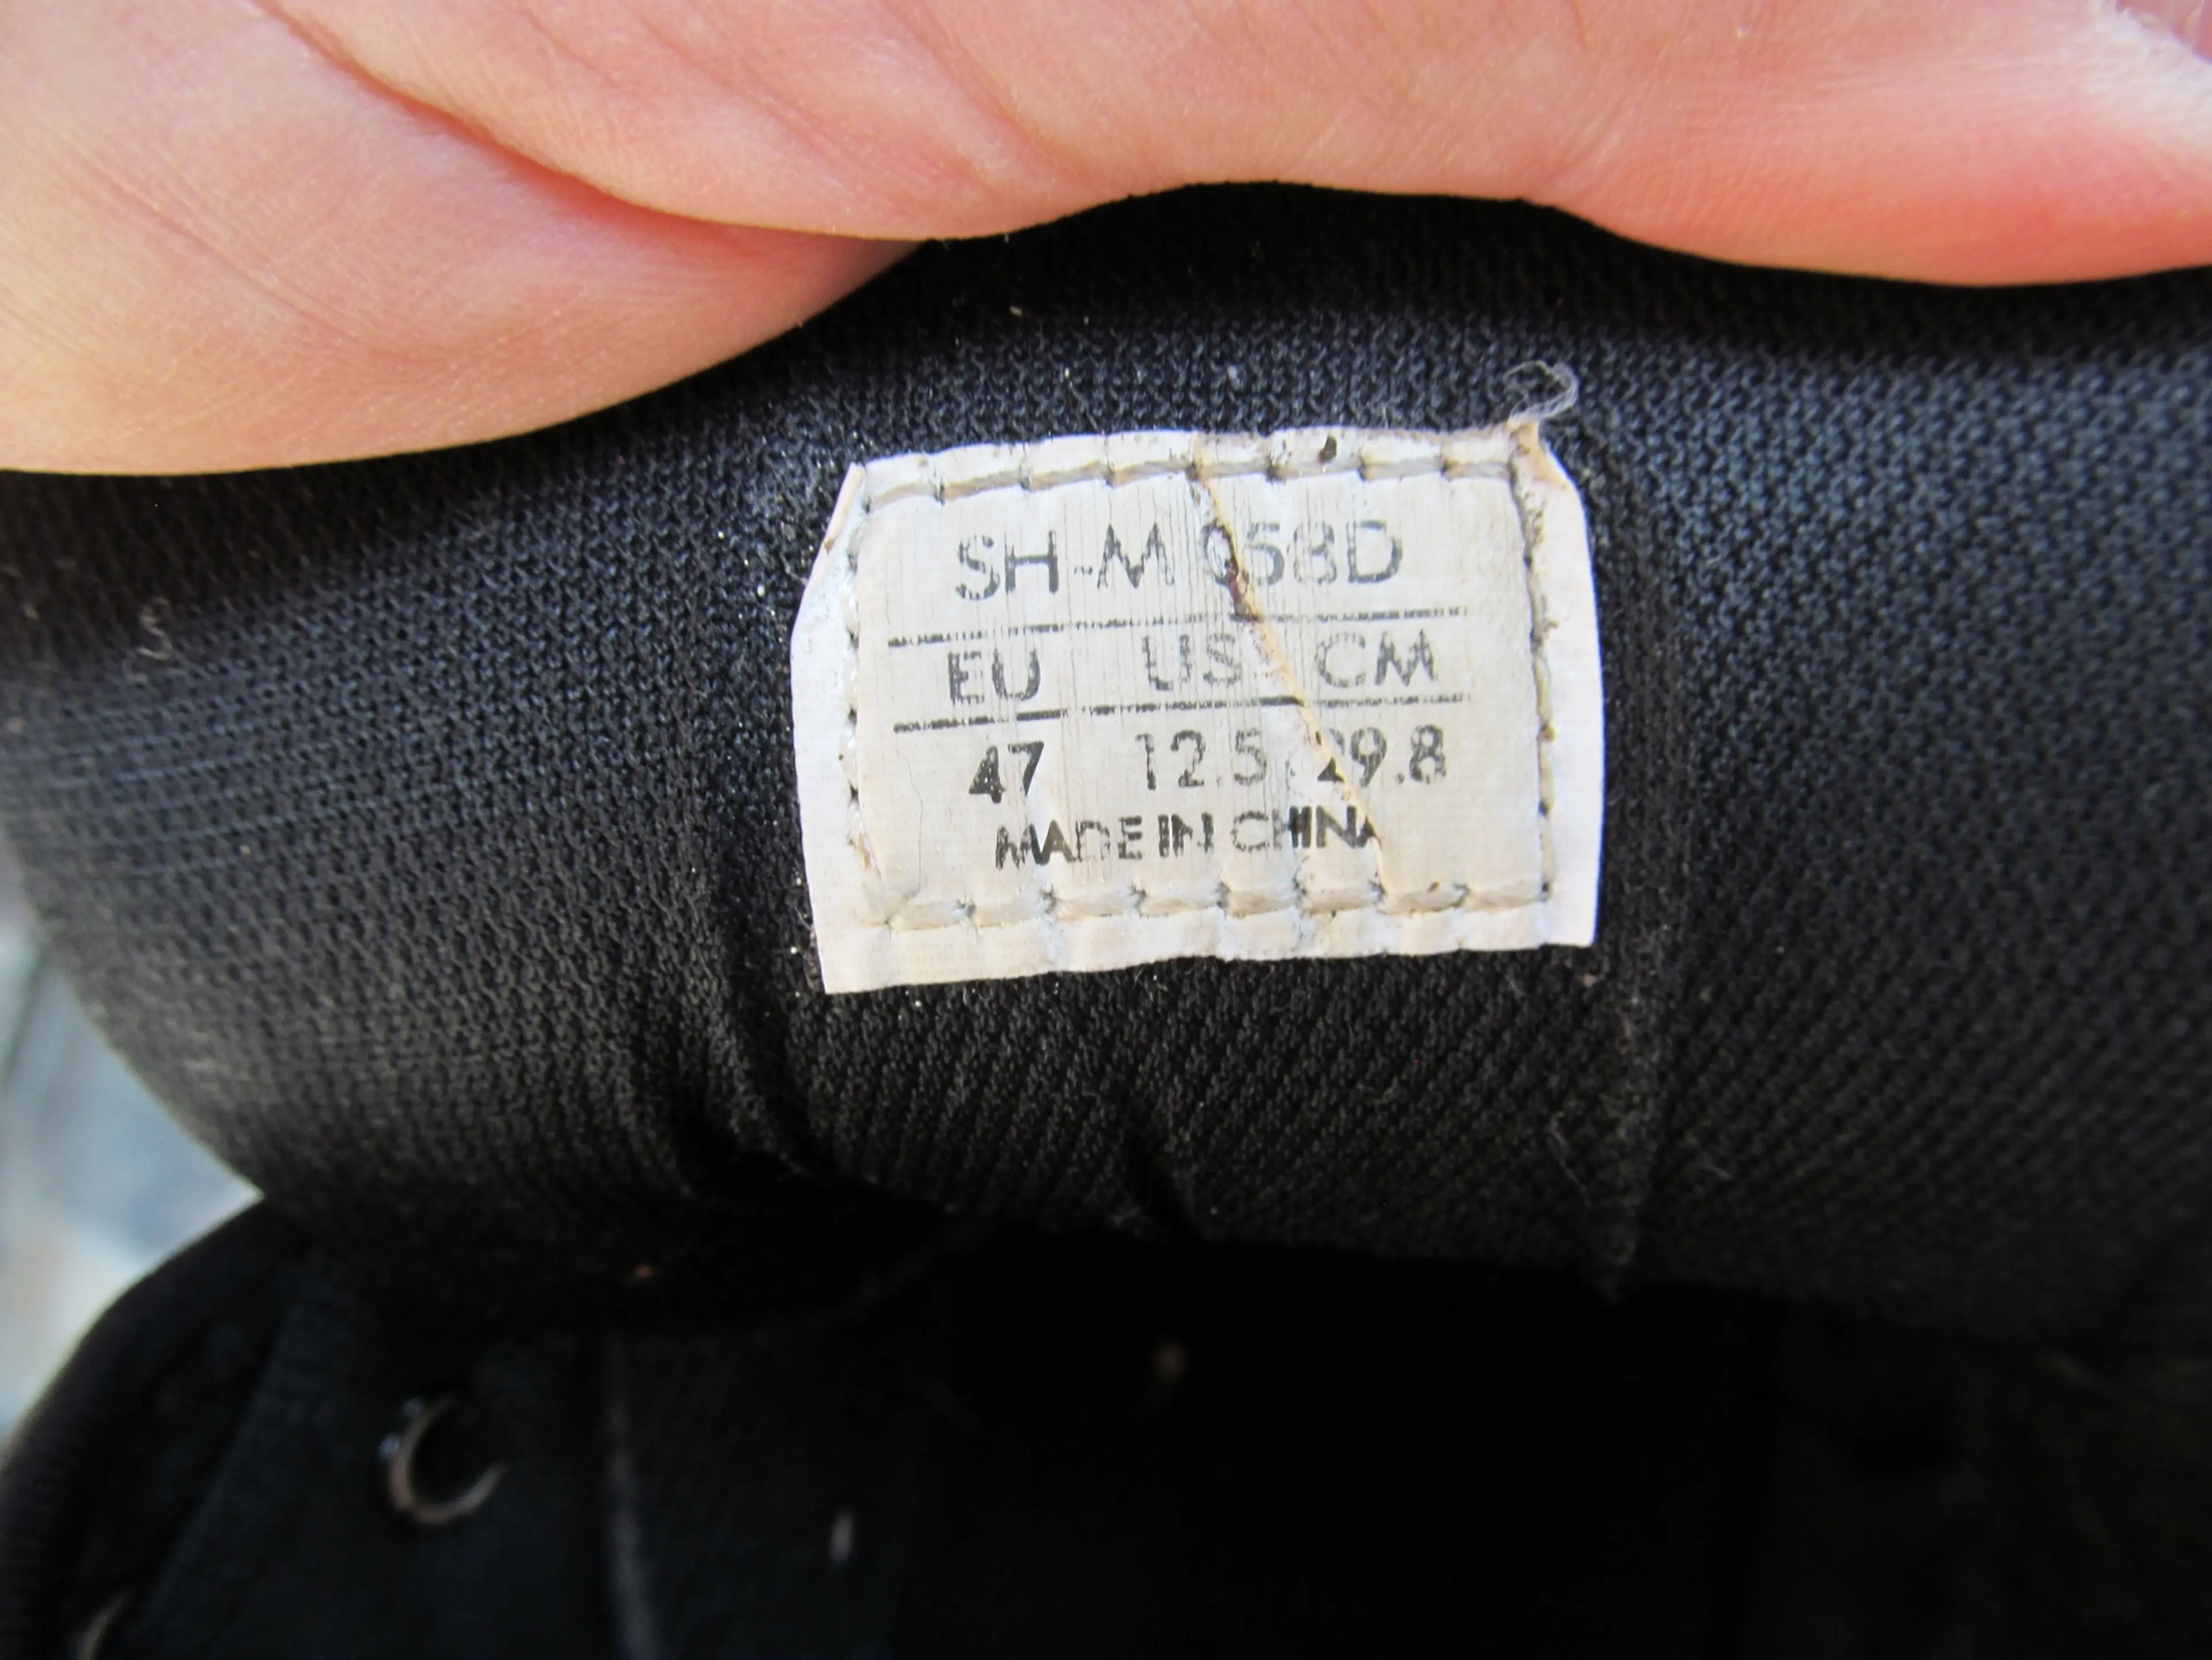 3. Pantofi Shimano SH-M058D nr 47, 29.8 cm